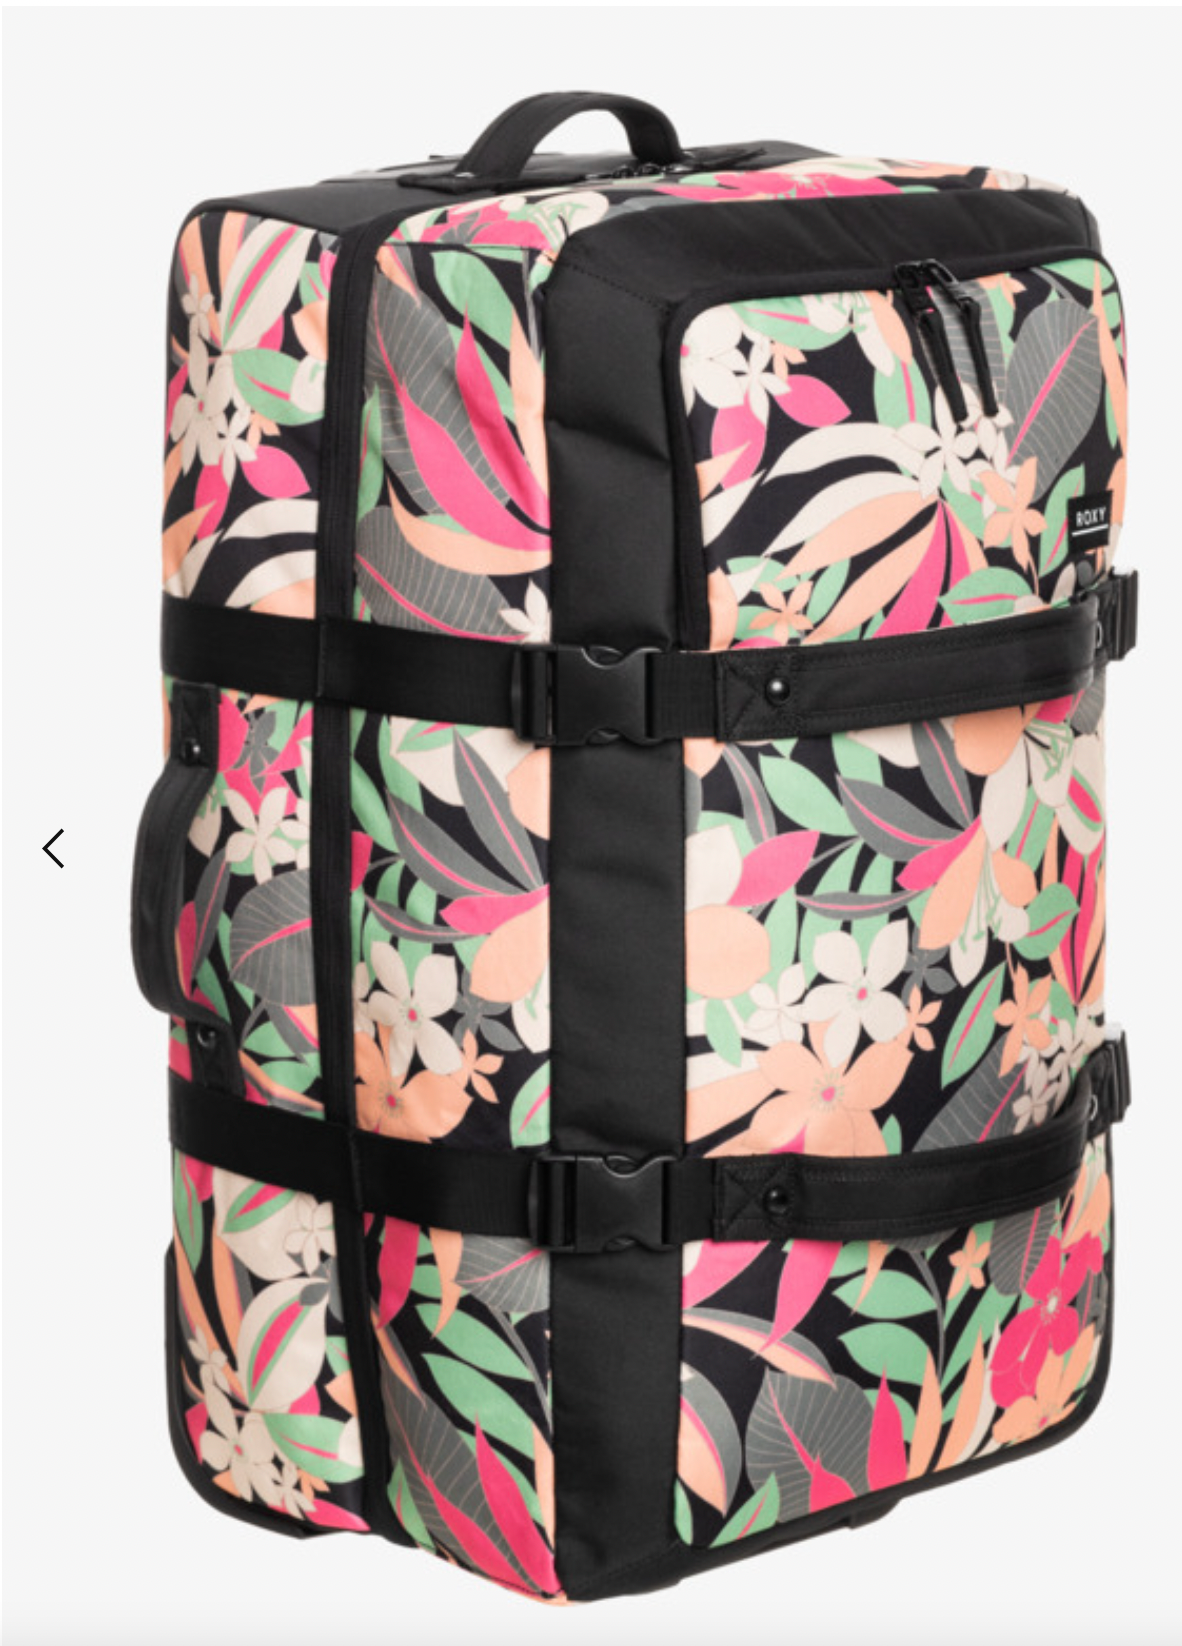 ROXY Travel Dreaming - Medium Wheelie Suitcase for Women